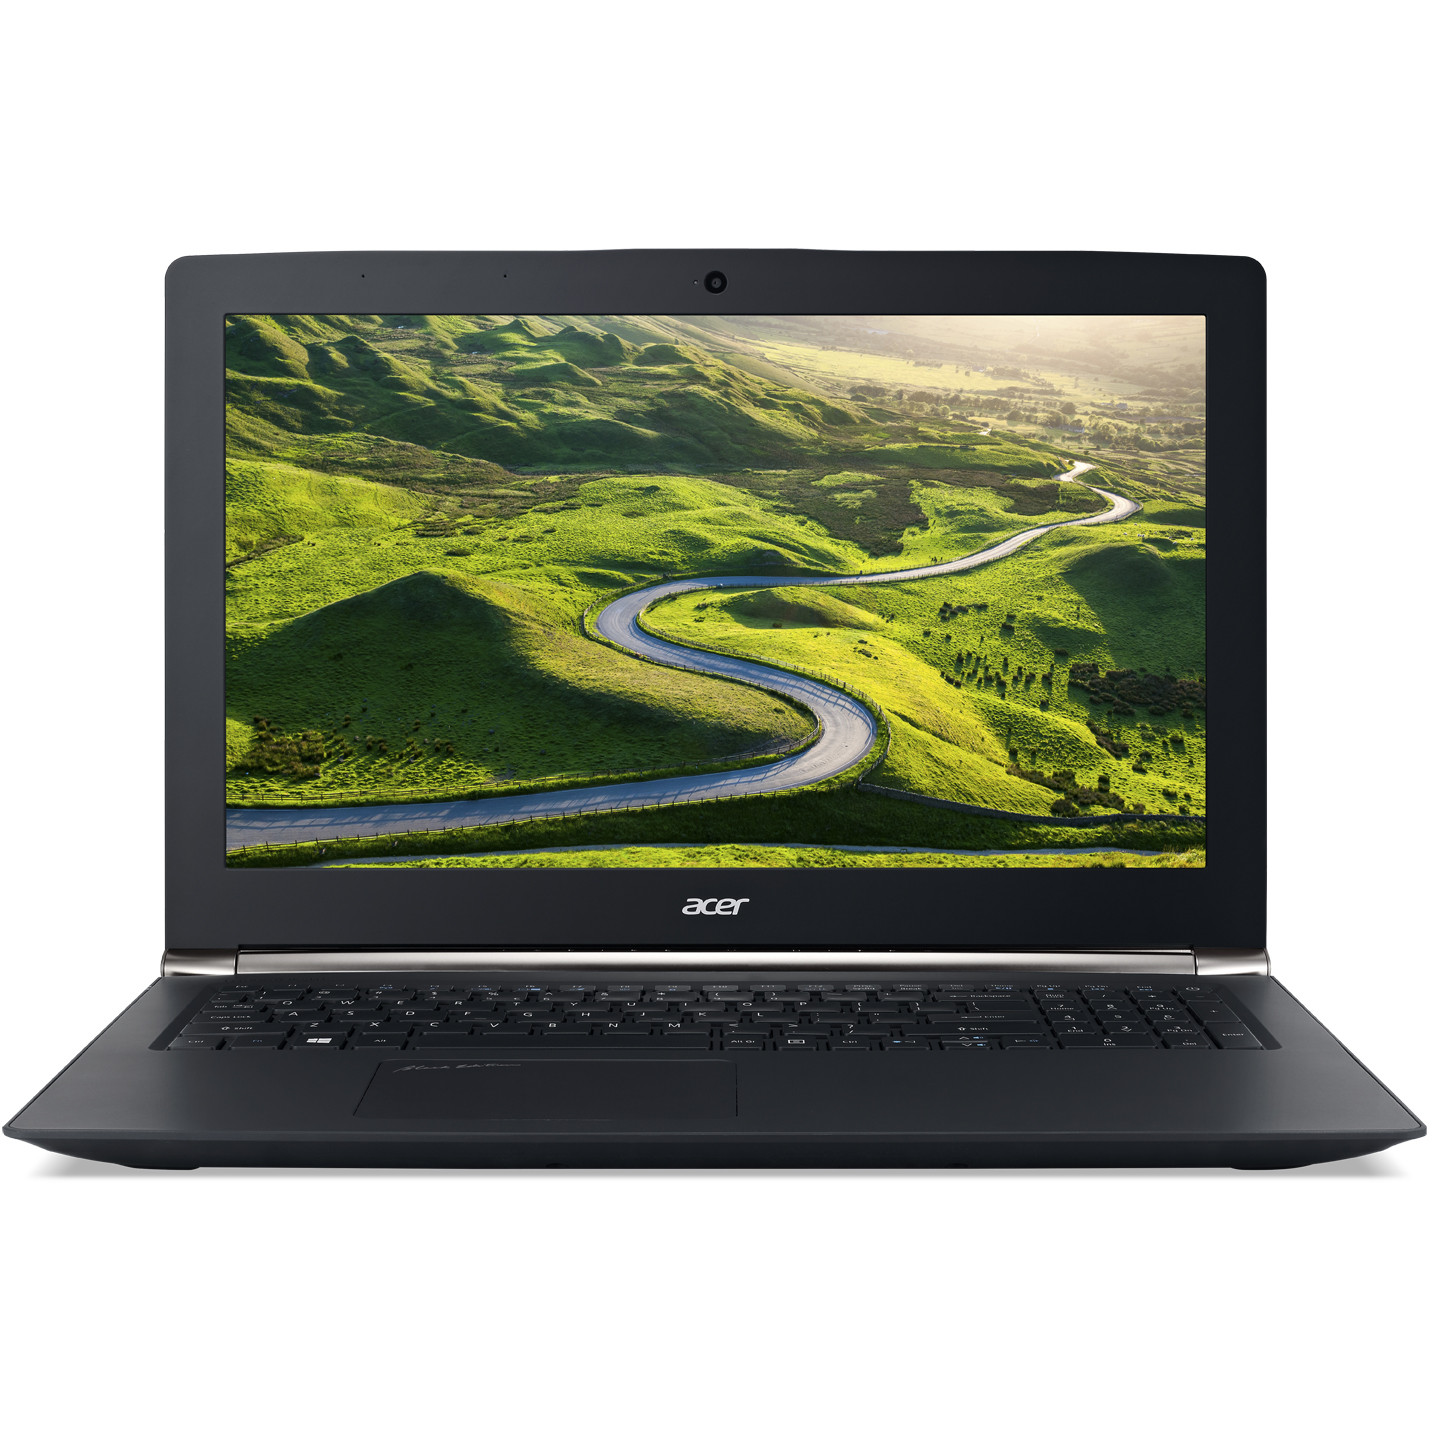  Laptop Acer Aspire VN7-592G, Intel Core i7-6700HQ, 8GB DDR4, HDD 500GB + SSD 128GB, nVidia GeForce GTX 960M 4GB, Linux 